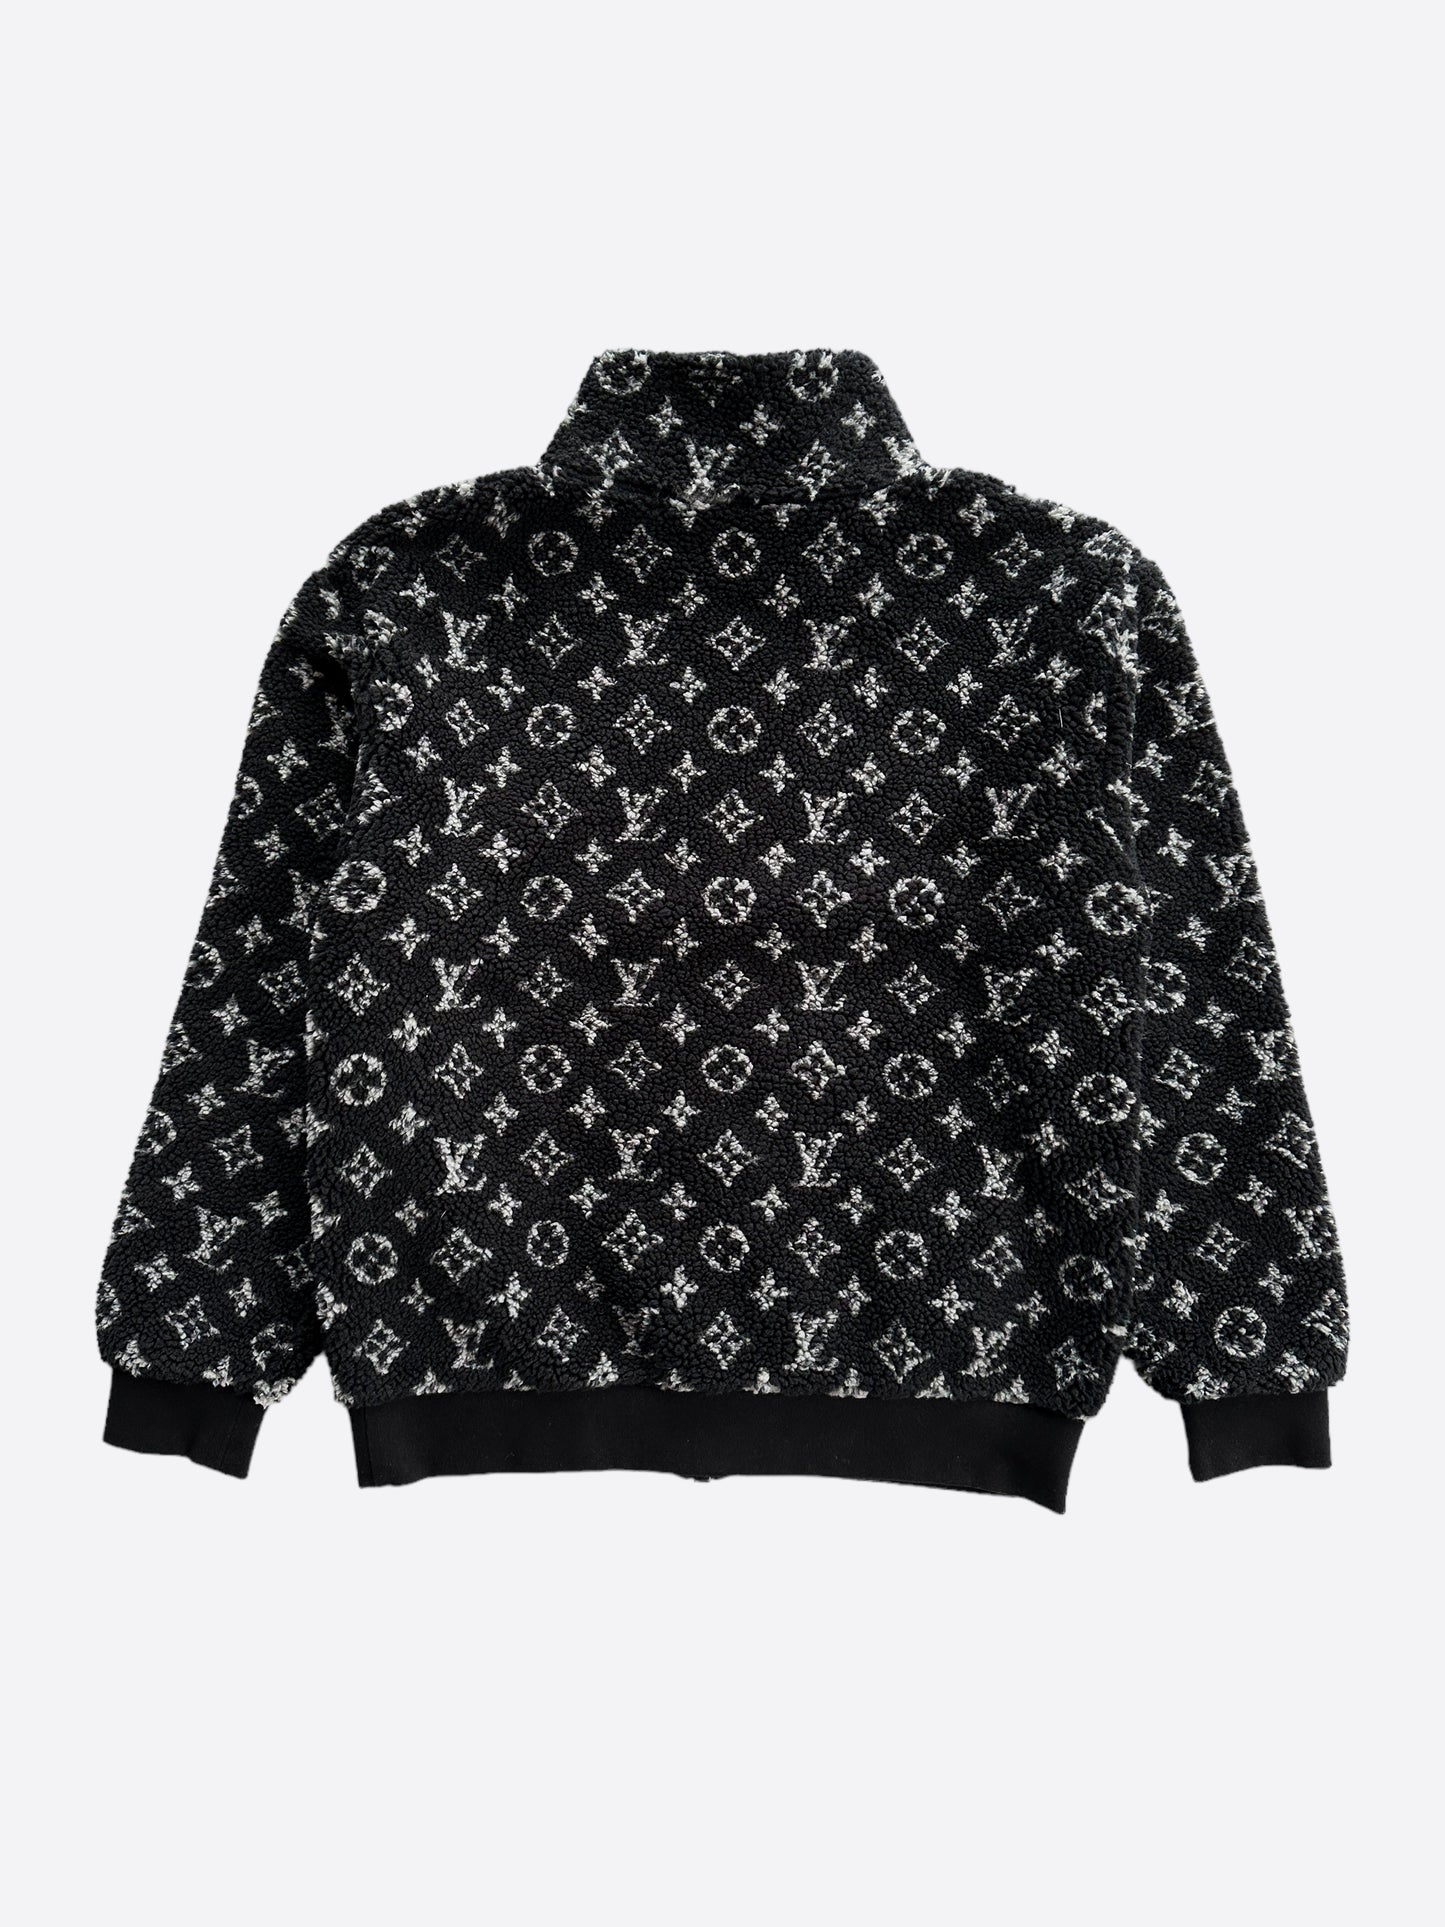 Louis Vuitton Men's XL Black x Grey Monogram Teddy Jacket Fleece